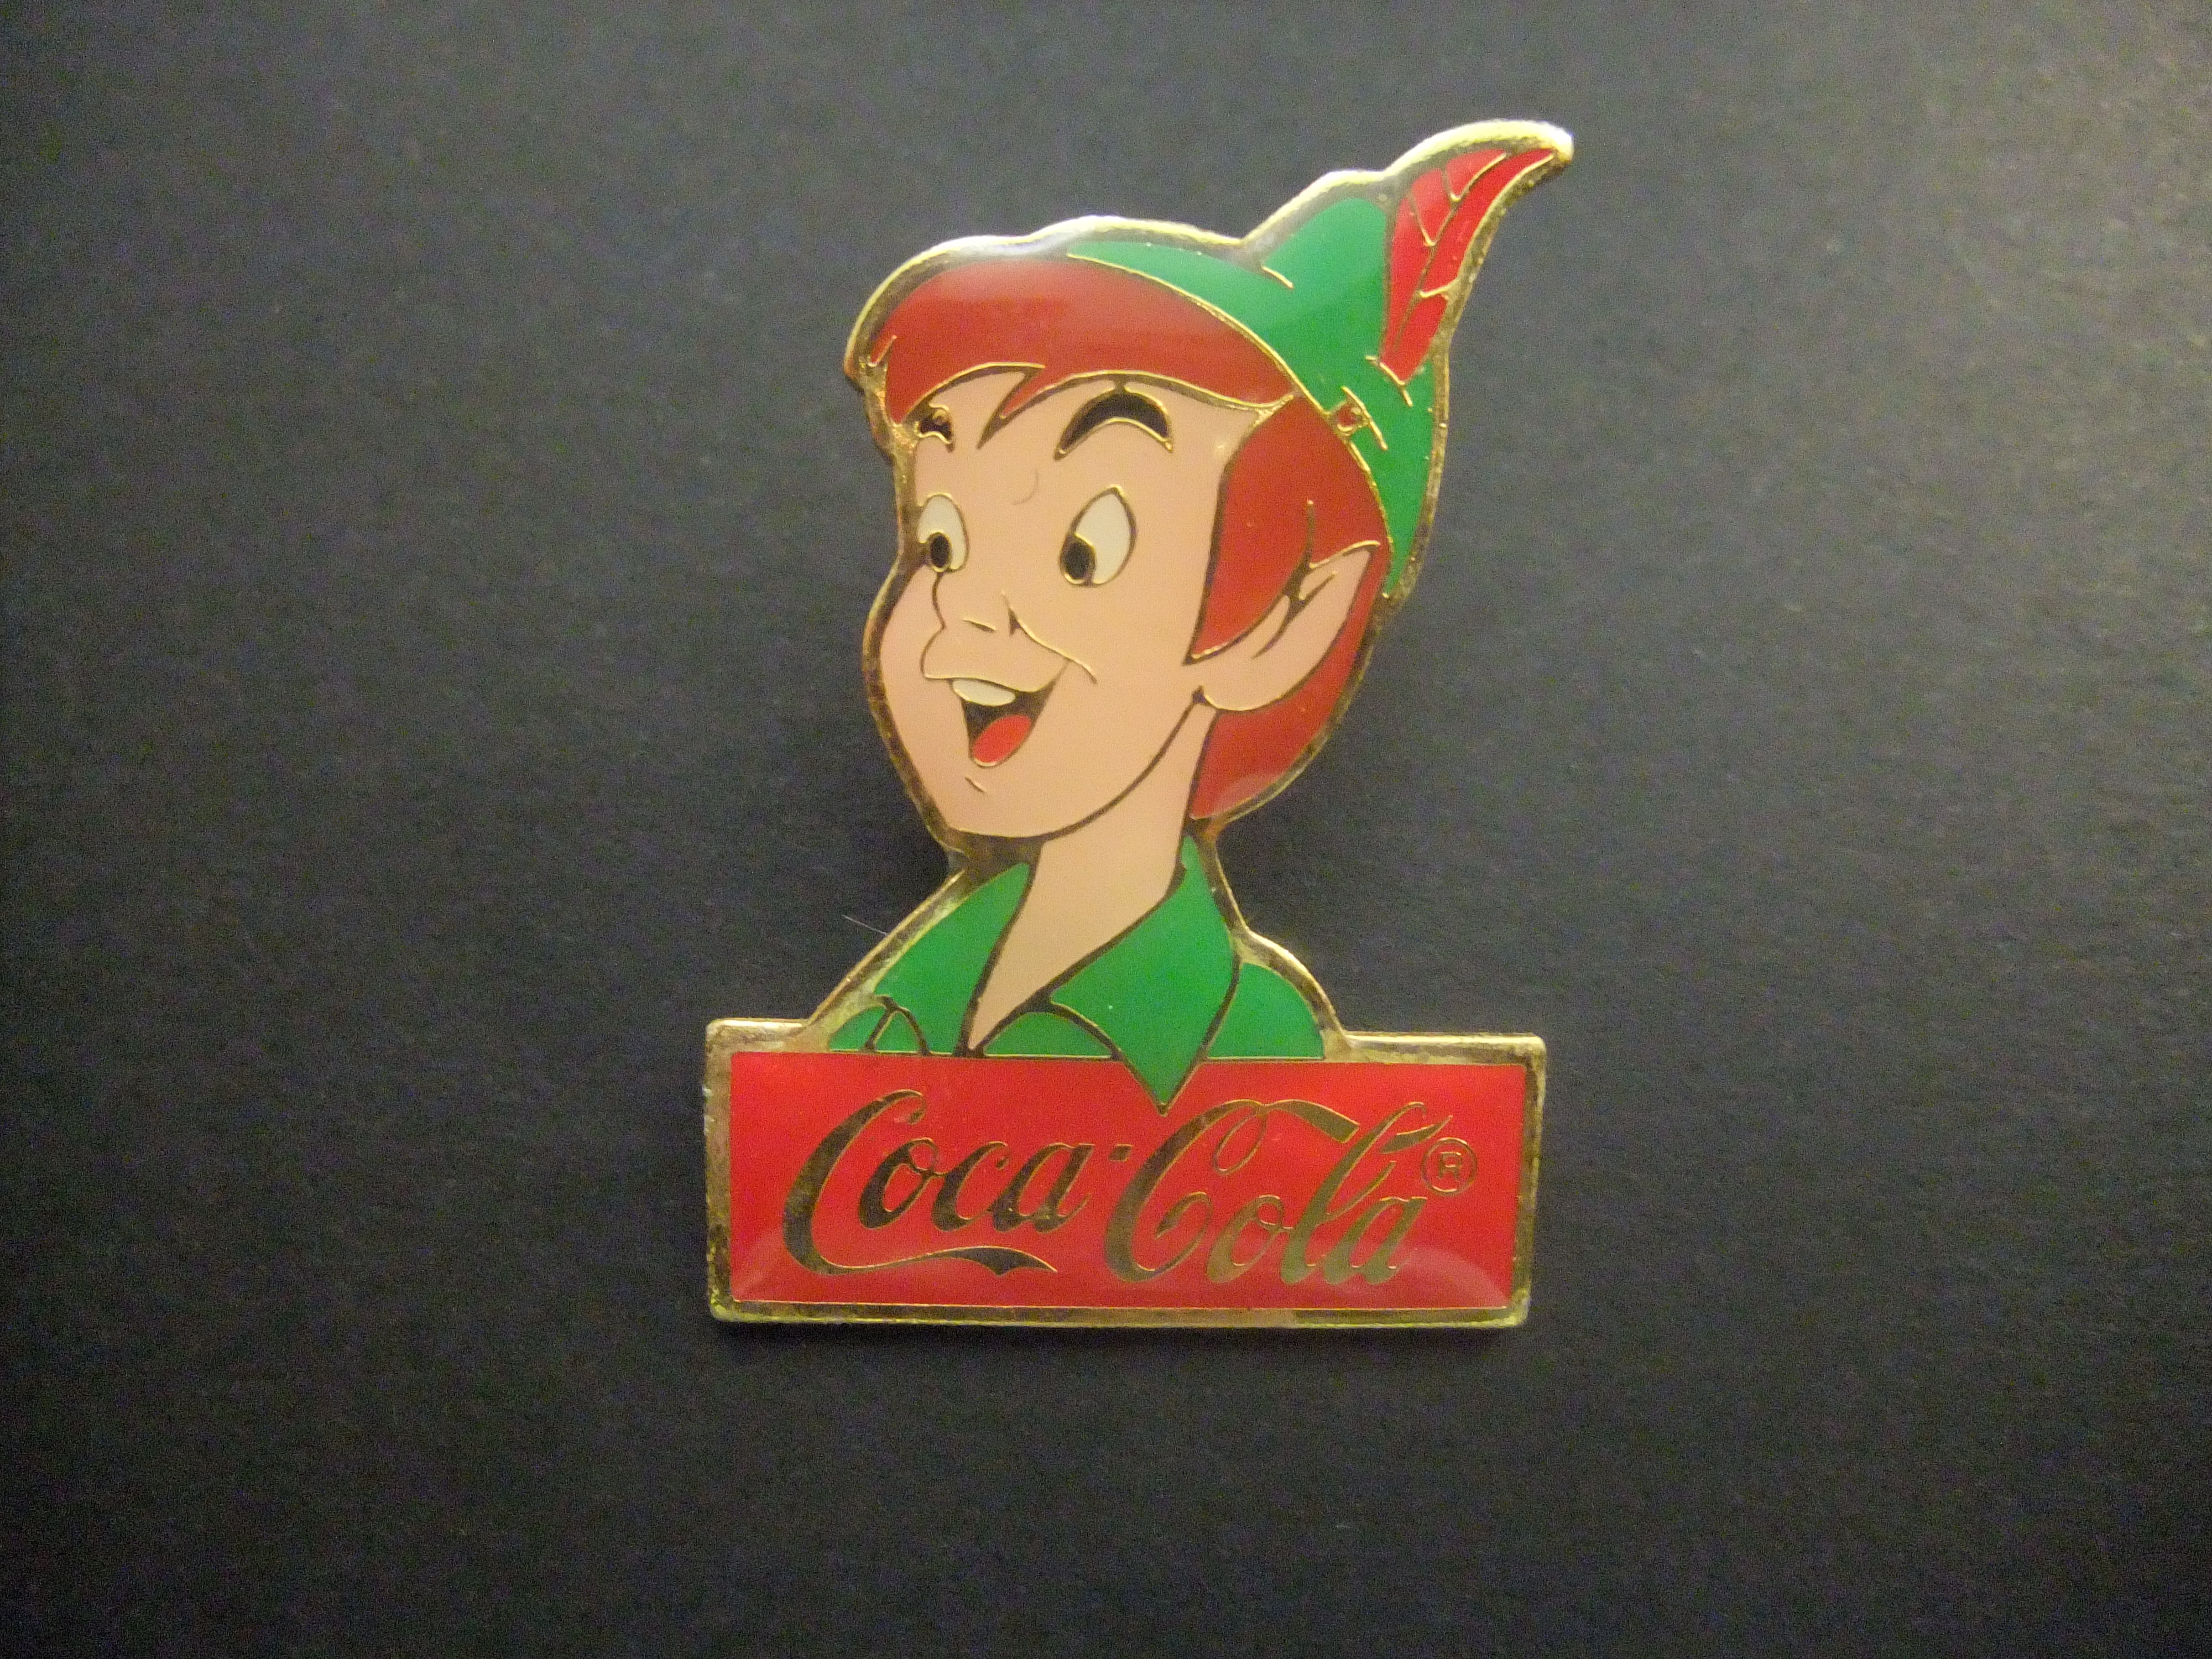 Peter Pan Walt Disney film personage sponsor Coca-Cola